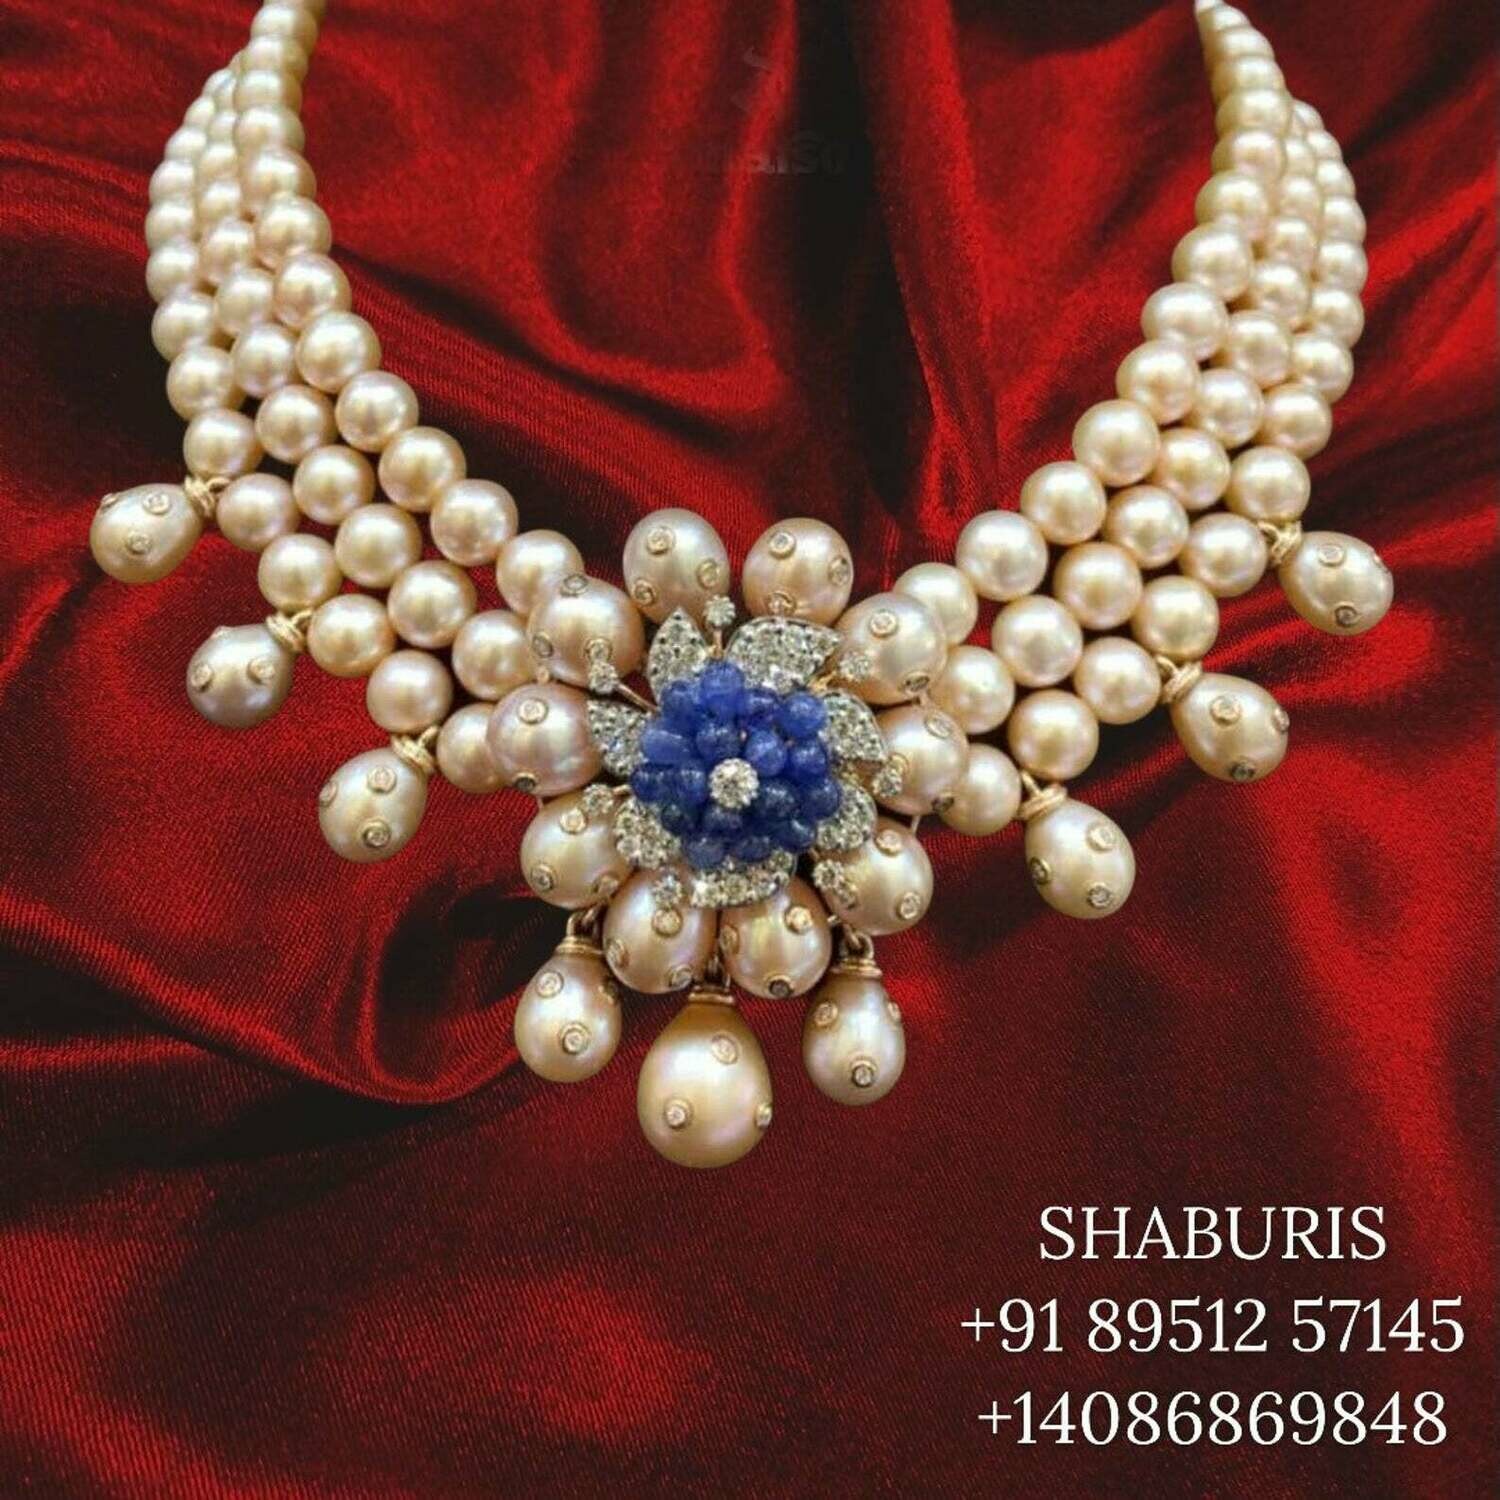 Latest Indian Jewelry,South Indian Jewellery,Pure silver diamond necklace,Swaroski Pendent,Indian Wedding Jewelry -NIHIRA-SHABURIS